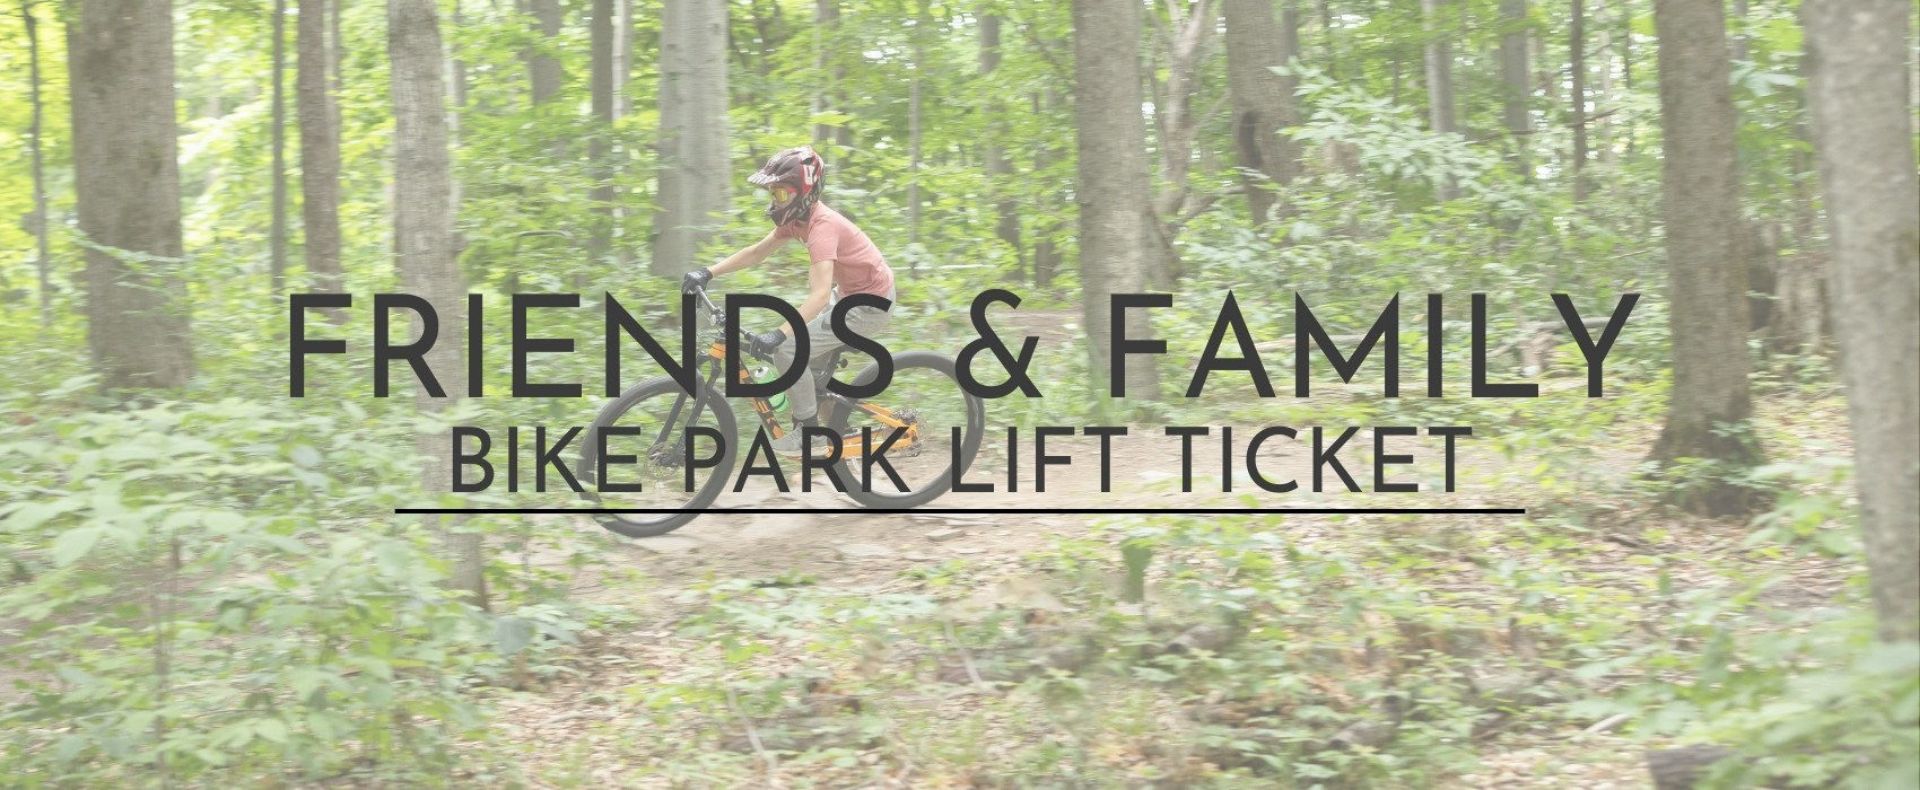 The Highlands Bike Park Friends & Family Lift Tickets